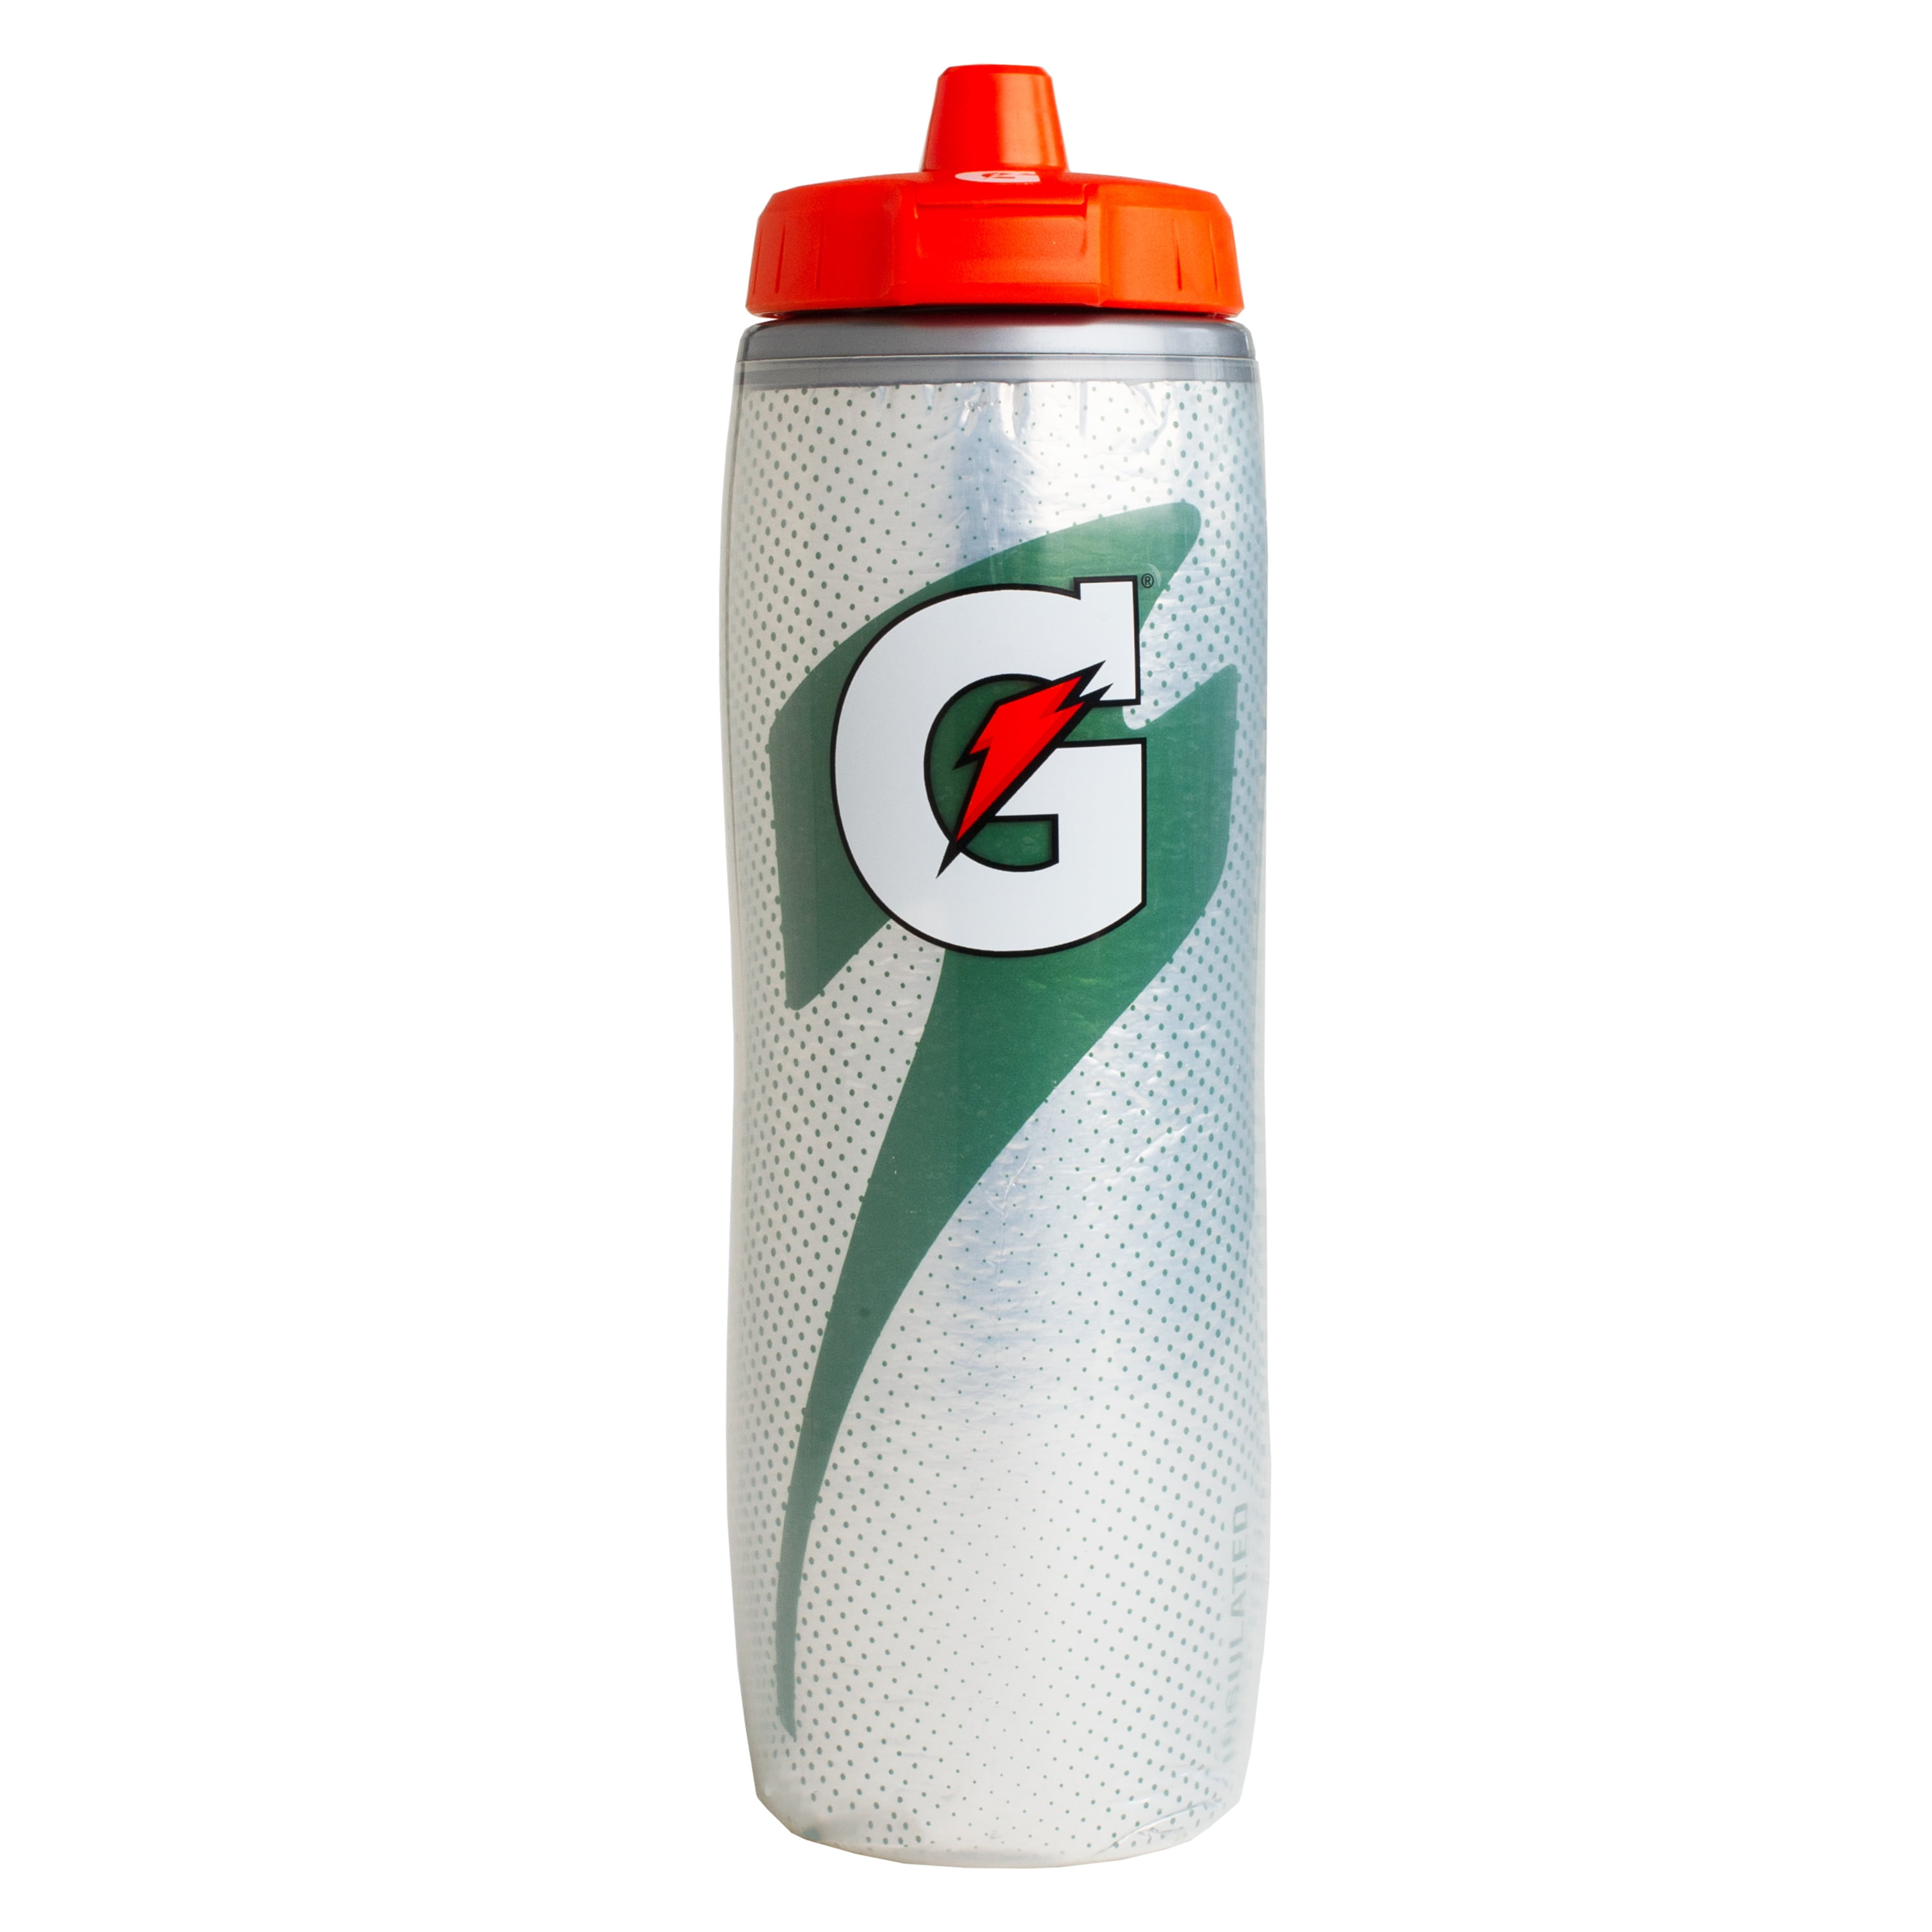 1 EACH Official Gatorade 20 fl oz Squeeze Water Bottle Sports Drink 